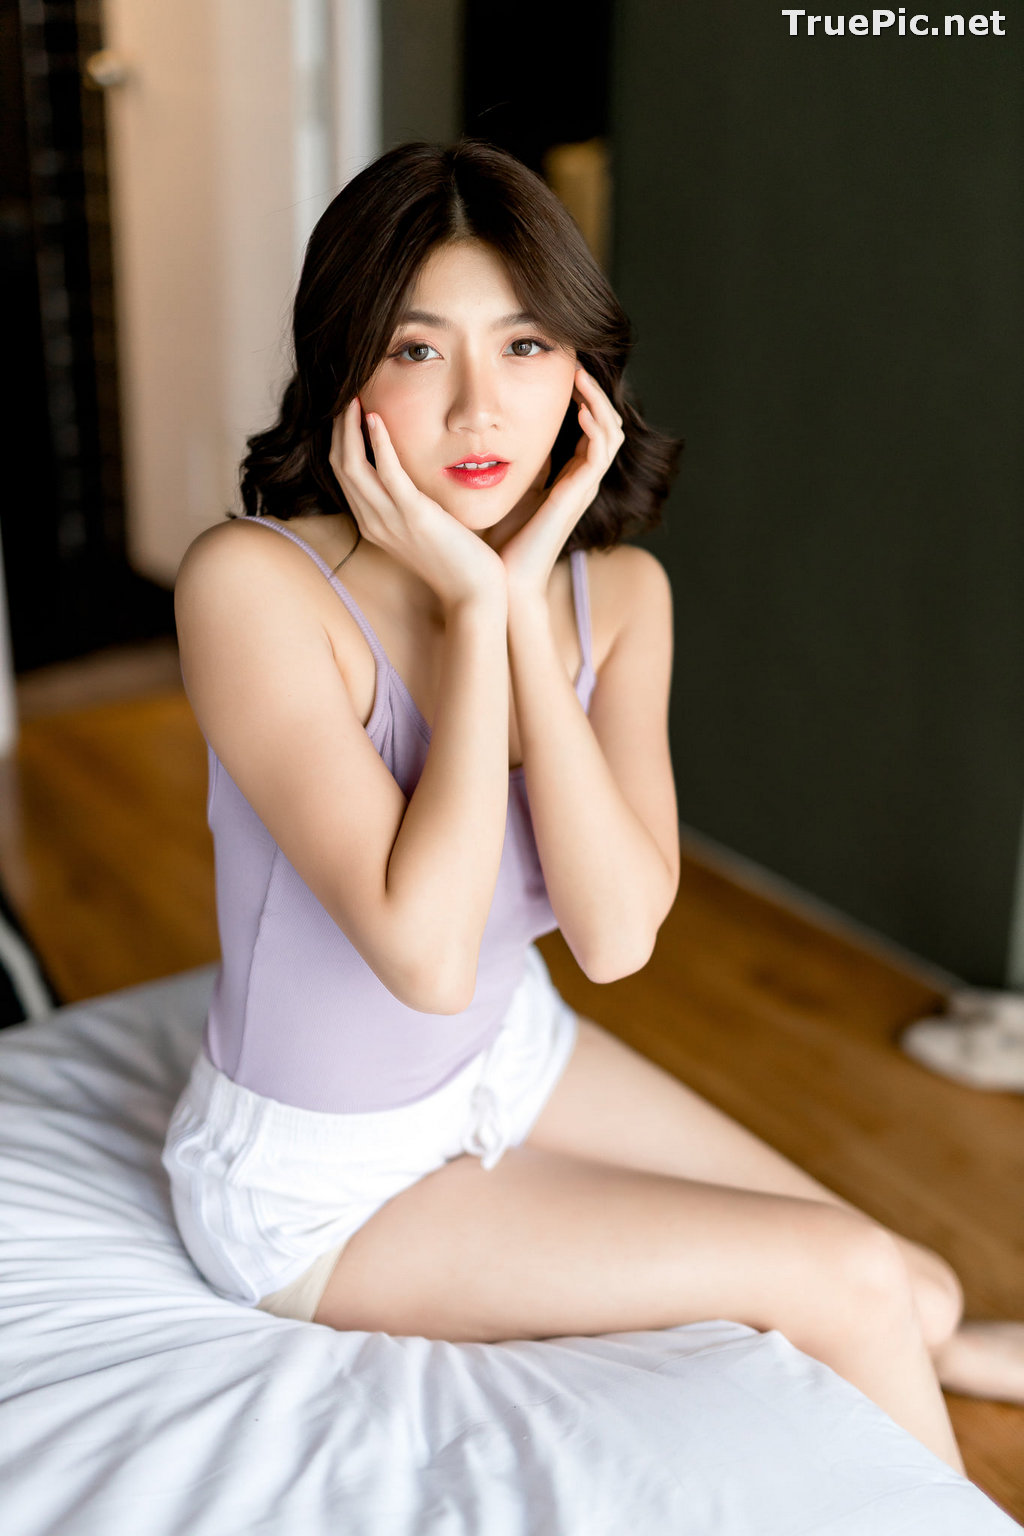 Image Thailand Model - Sasi Ngiunwan - Beautiful Girl Woke Up - TruePic.net - Picture-17